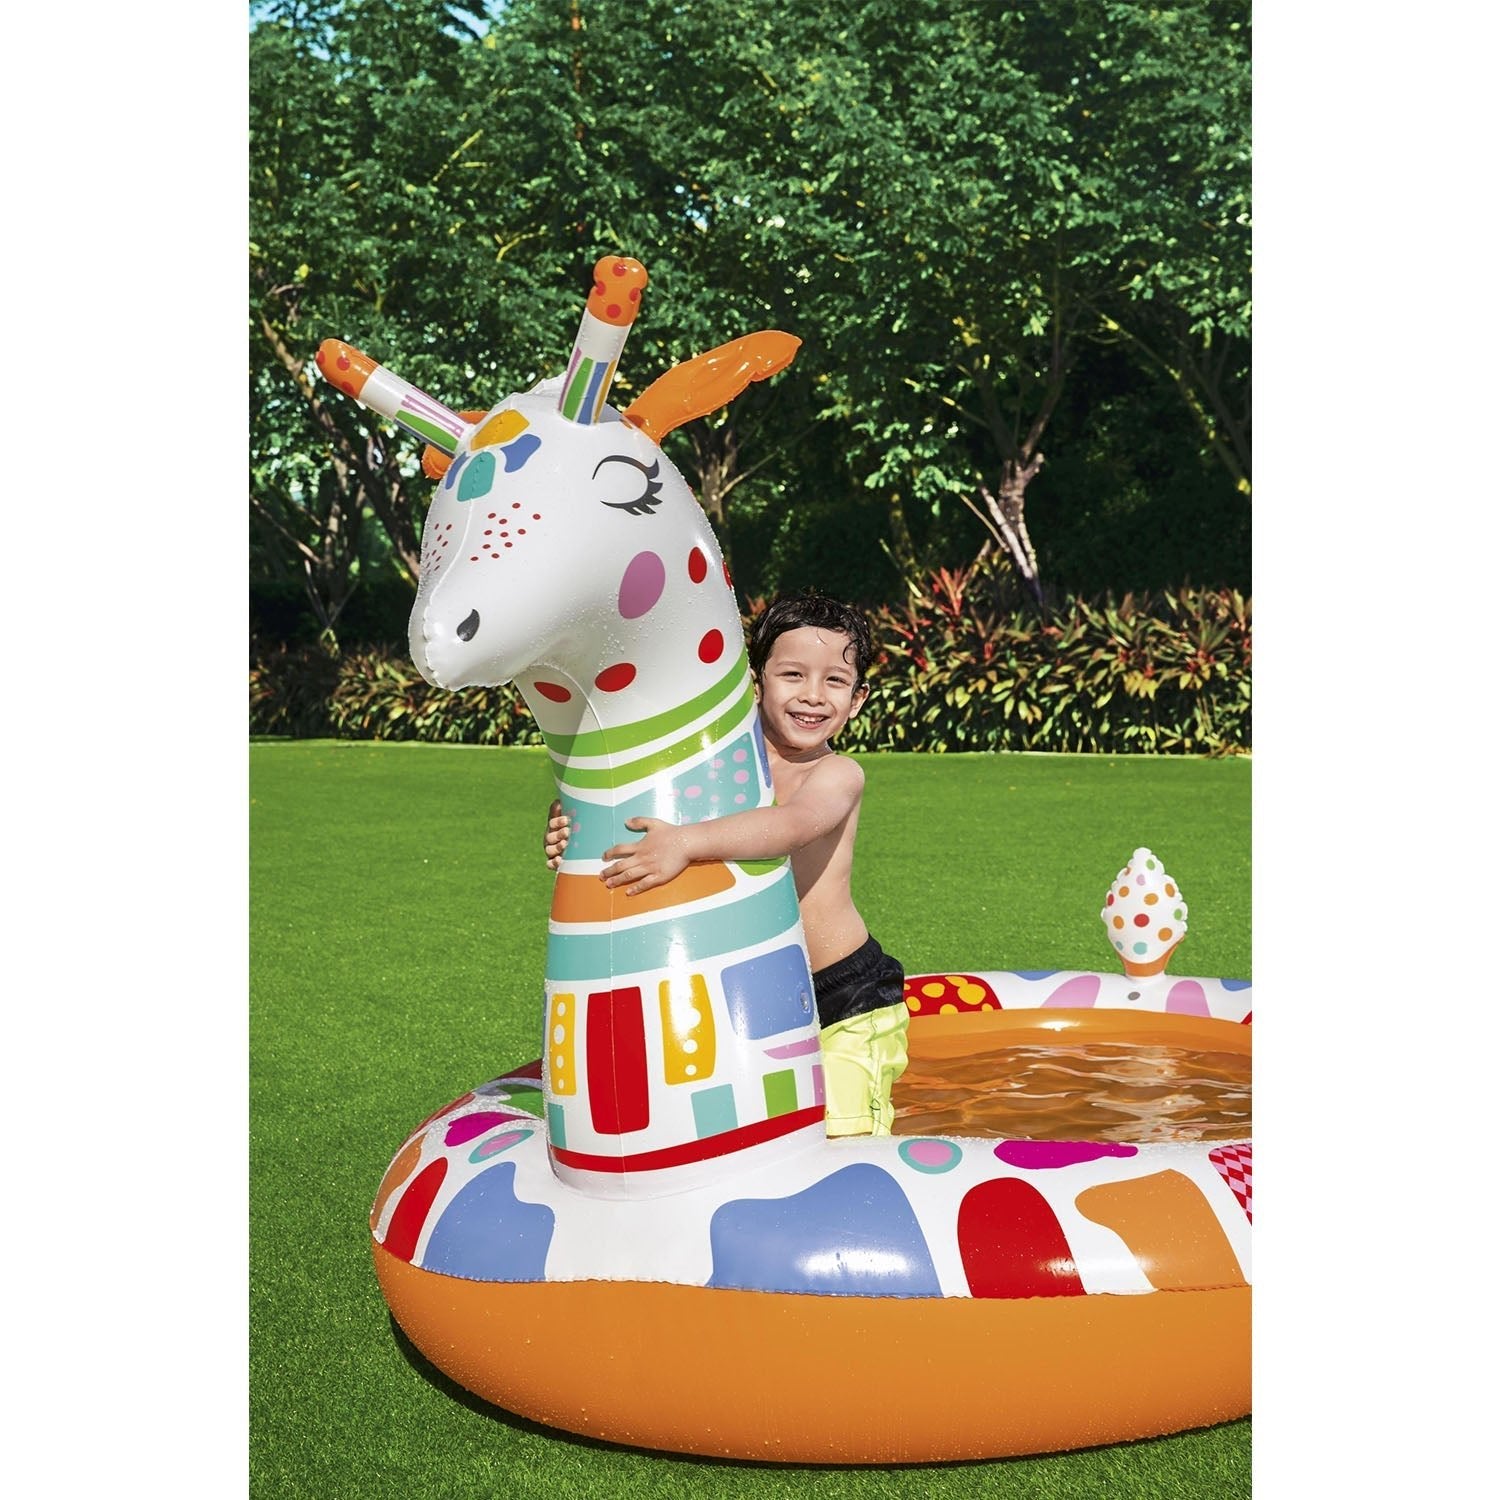 H2OGO! Groovy Giraffe Inflatable Play Pool For Kids, inflatable kiddie pool, small kiddie pool, swimming pool for backyard, swimming pool for kids, portable swimming pool, easy inflate swimming pool, H2OGO! pools for kids, above ground inflatable swimming pool 